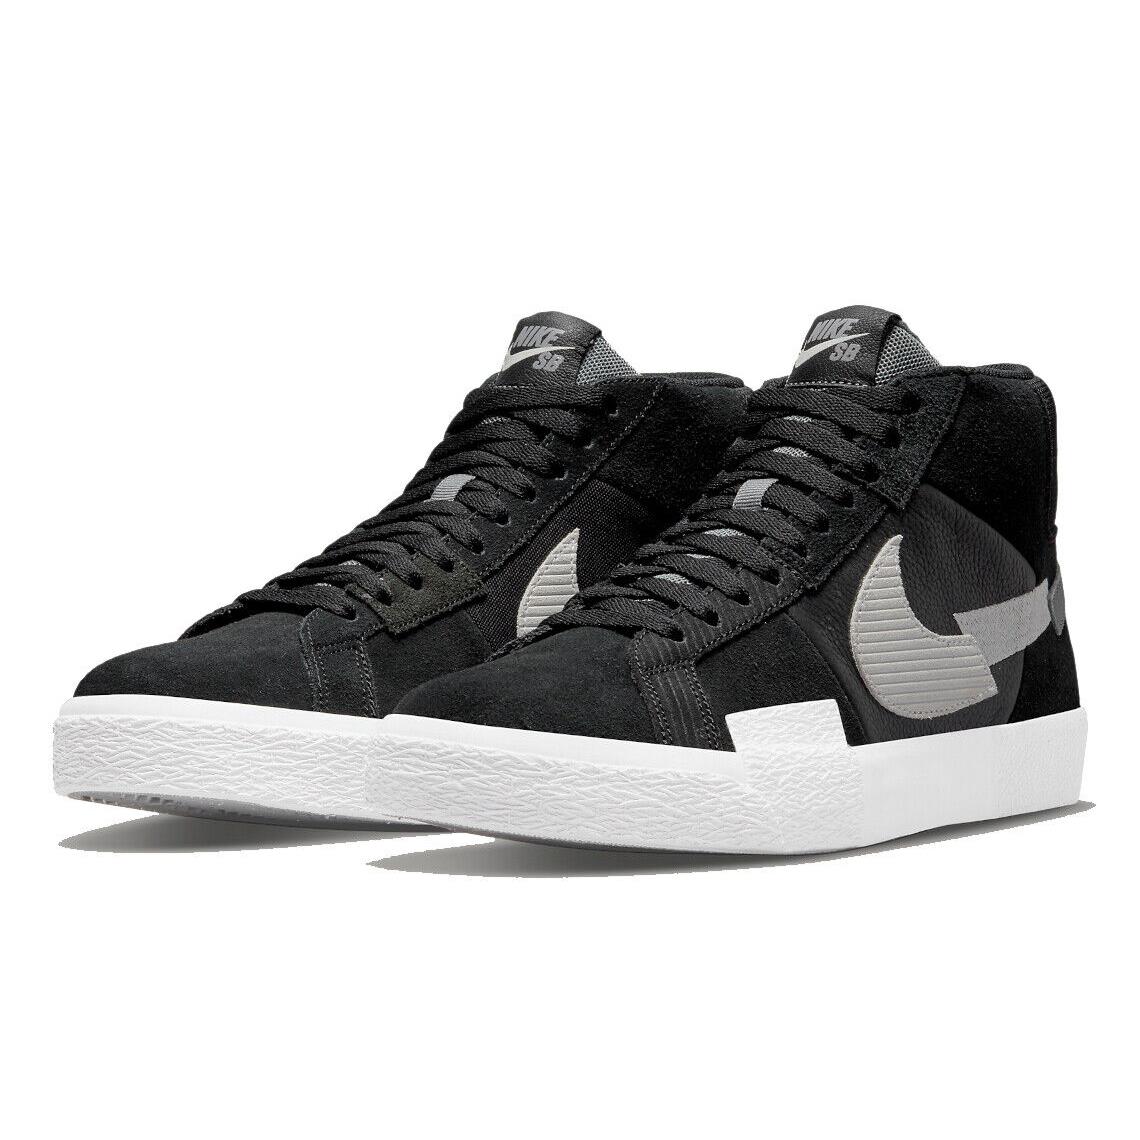 Nike SB Zoom Blazer Mid Prm Mens Size 9.5 Sneaker Shoes DA8854 001 Black White - Multicolor